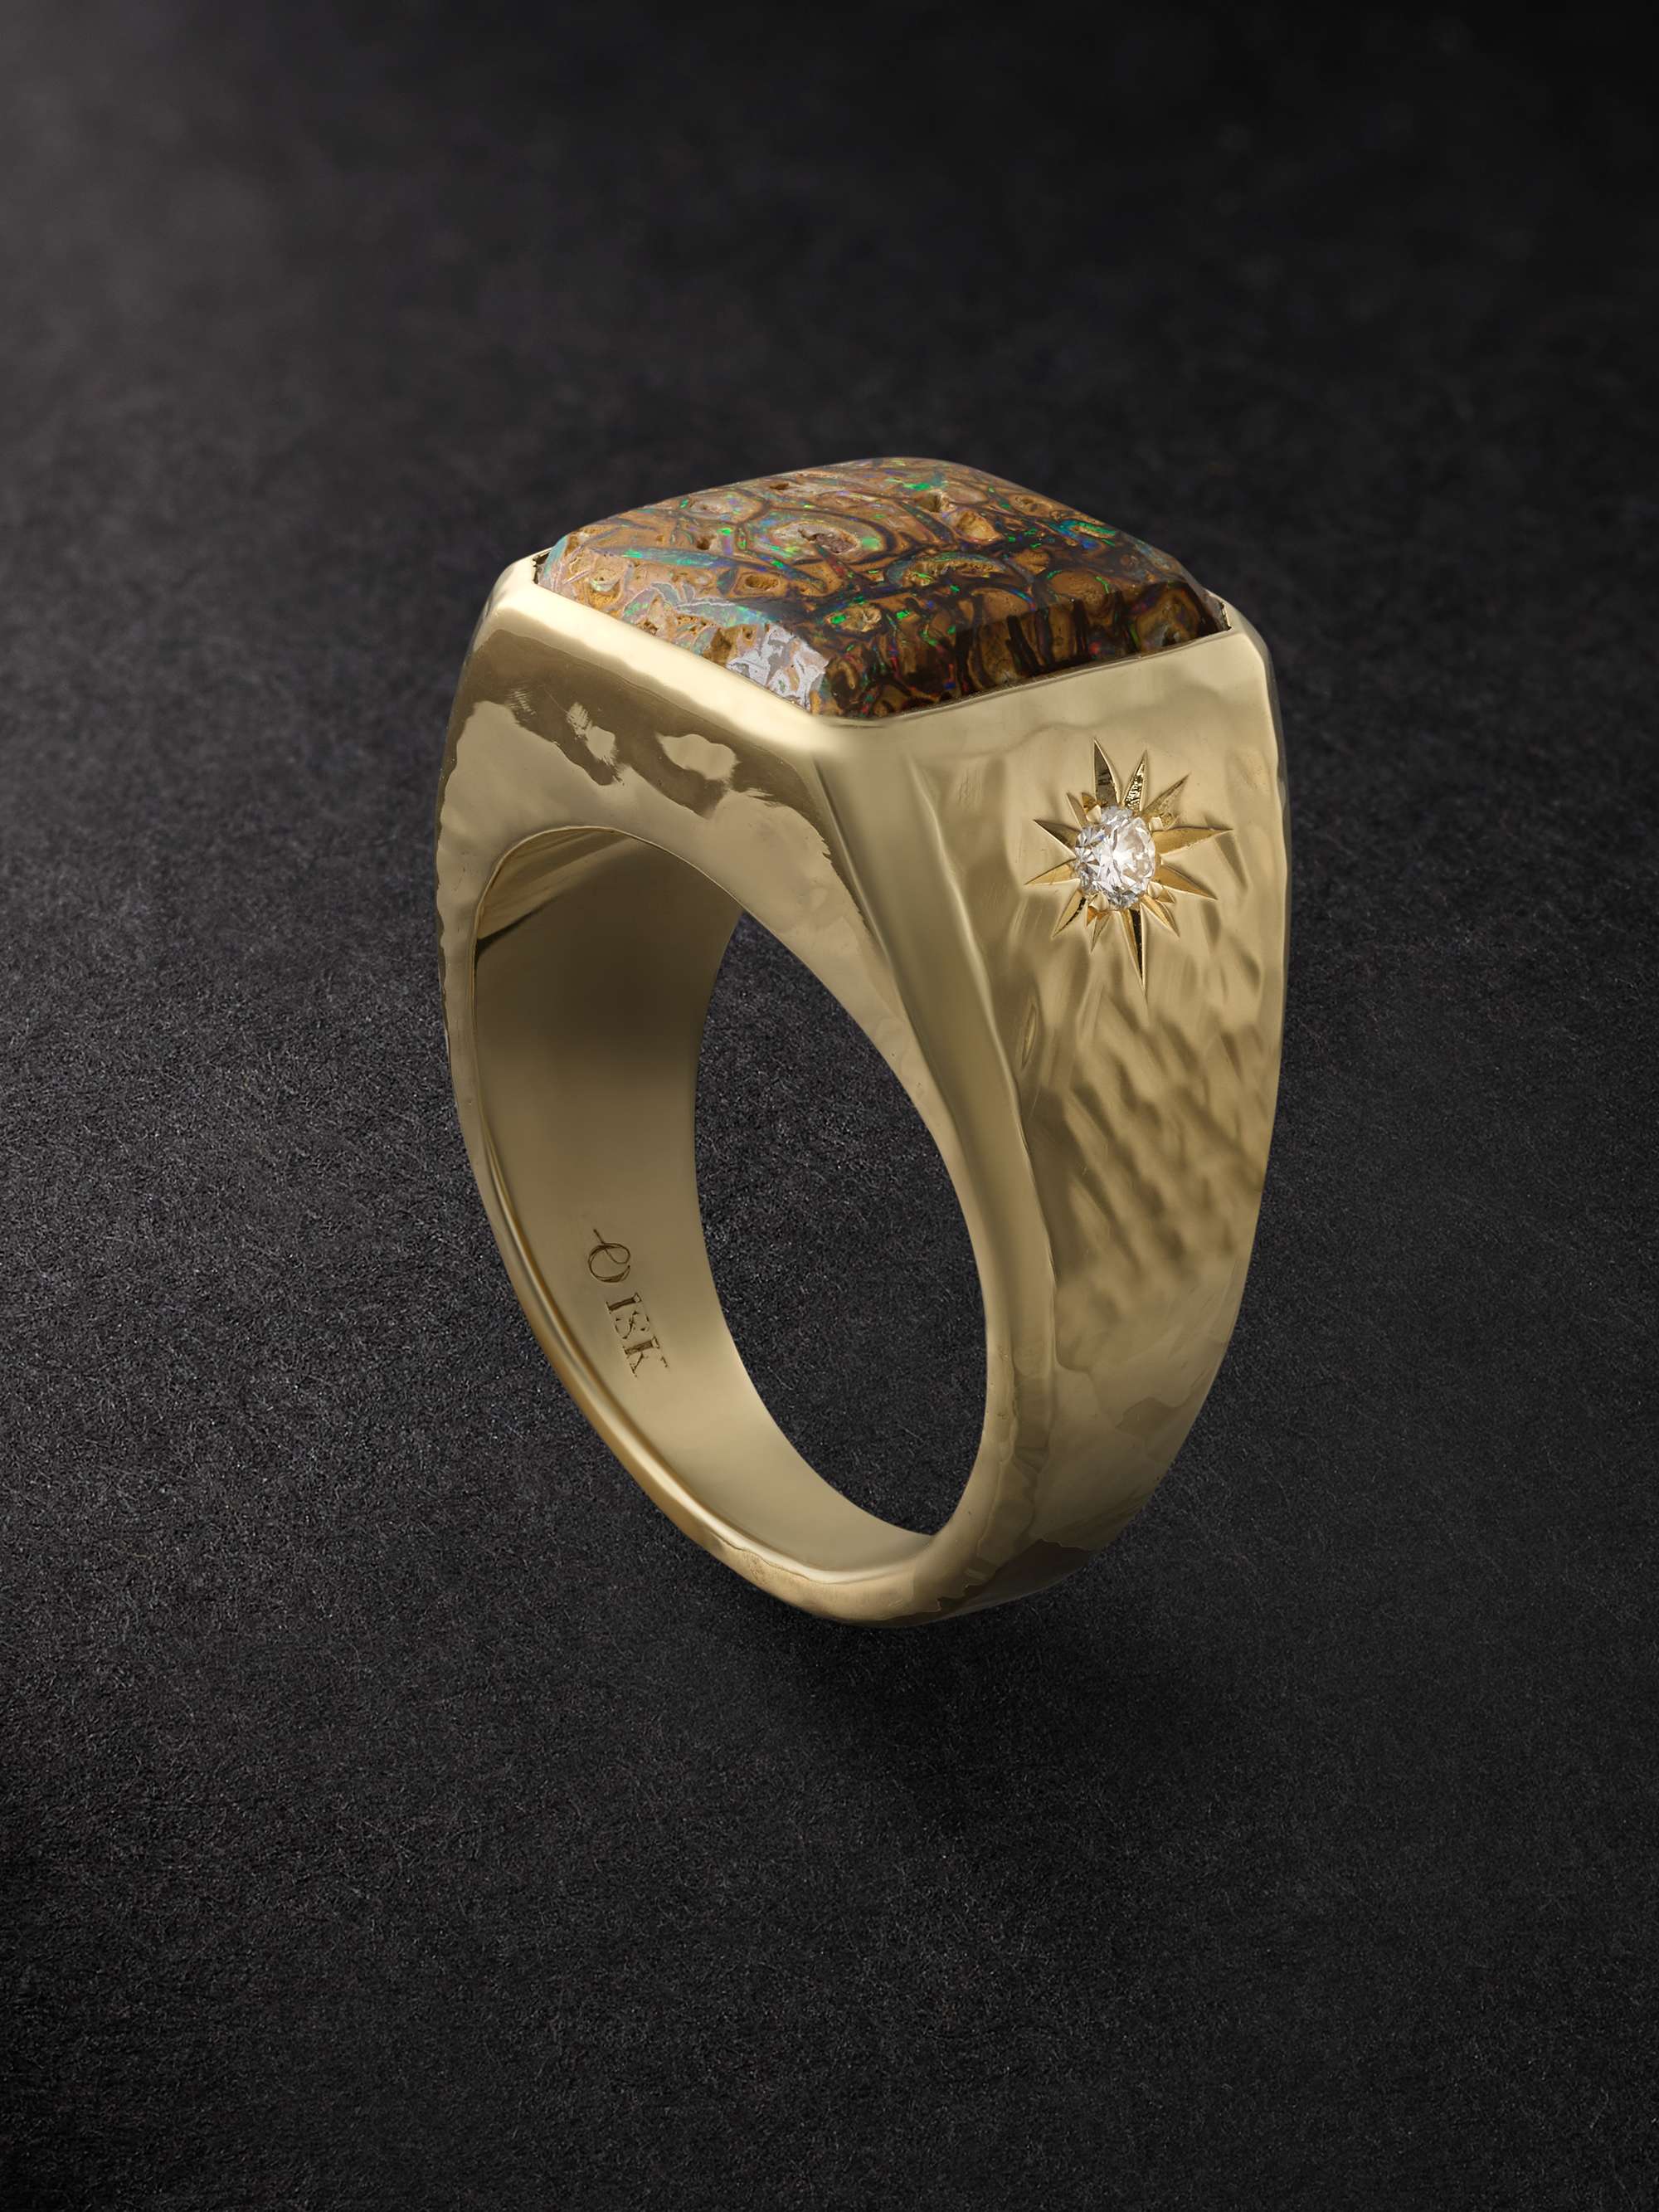 OCTAVIA ELIZABETH Ambition Gold, Yowah Opal and Diamond Ring